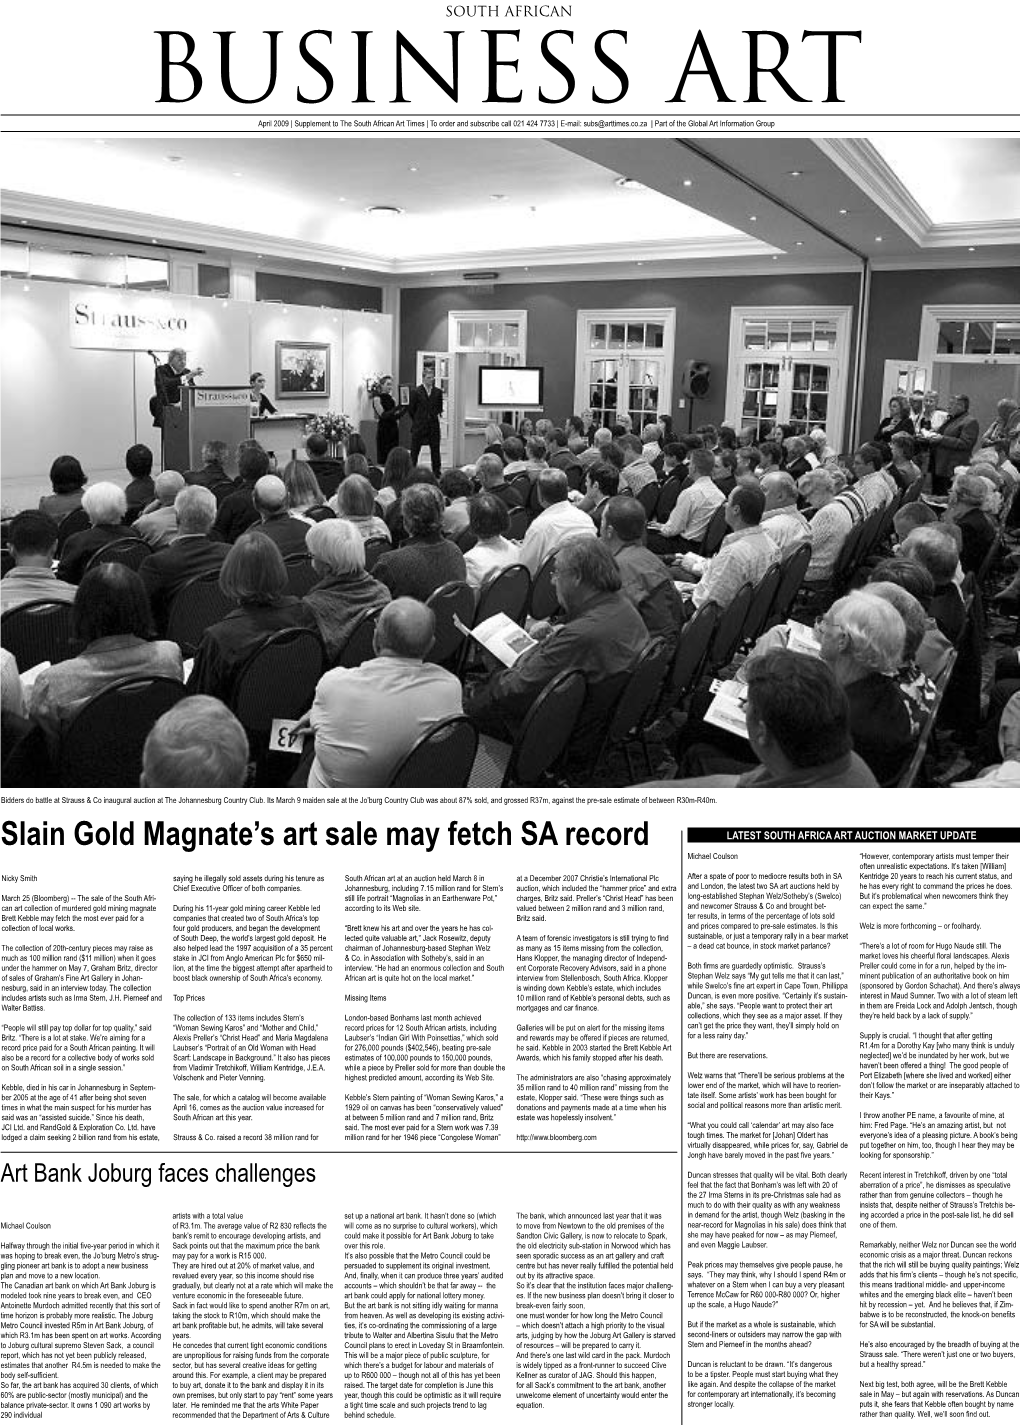 Slain Gold Magnate's Art Sale May Fetch SA Record